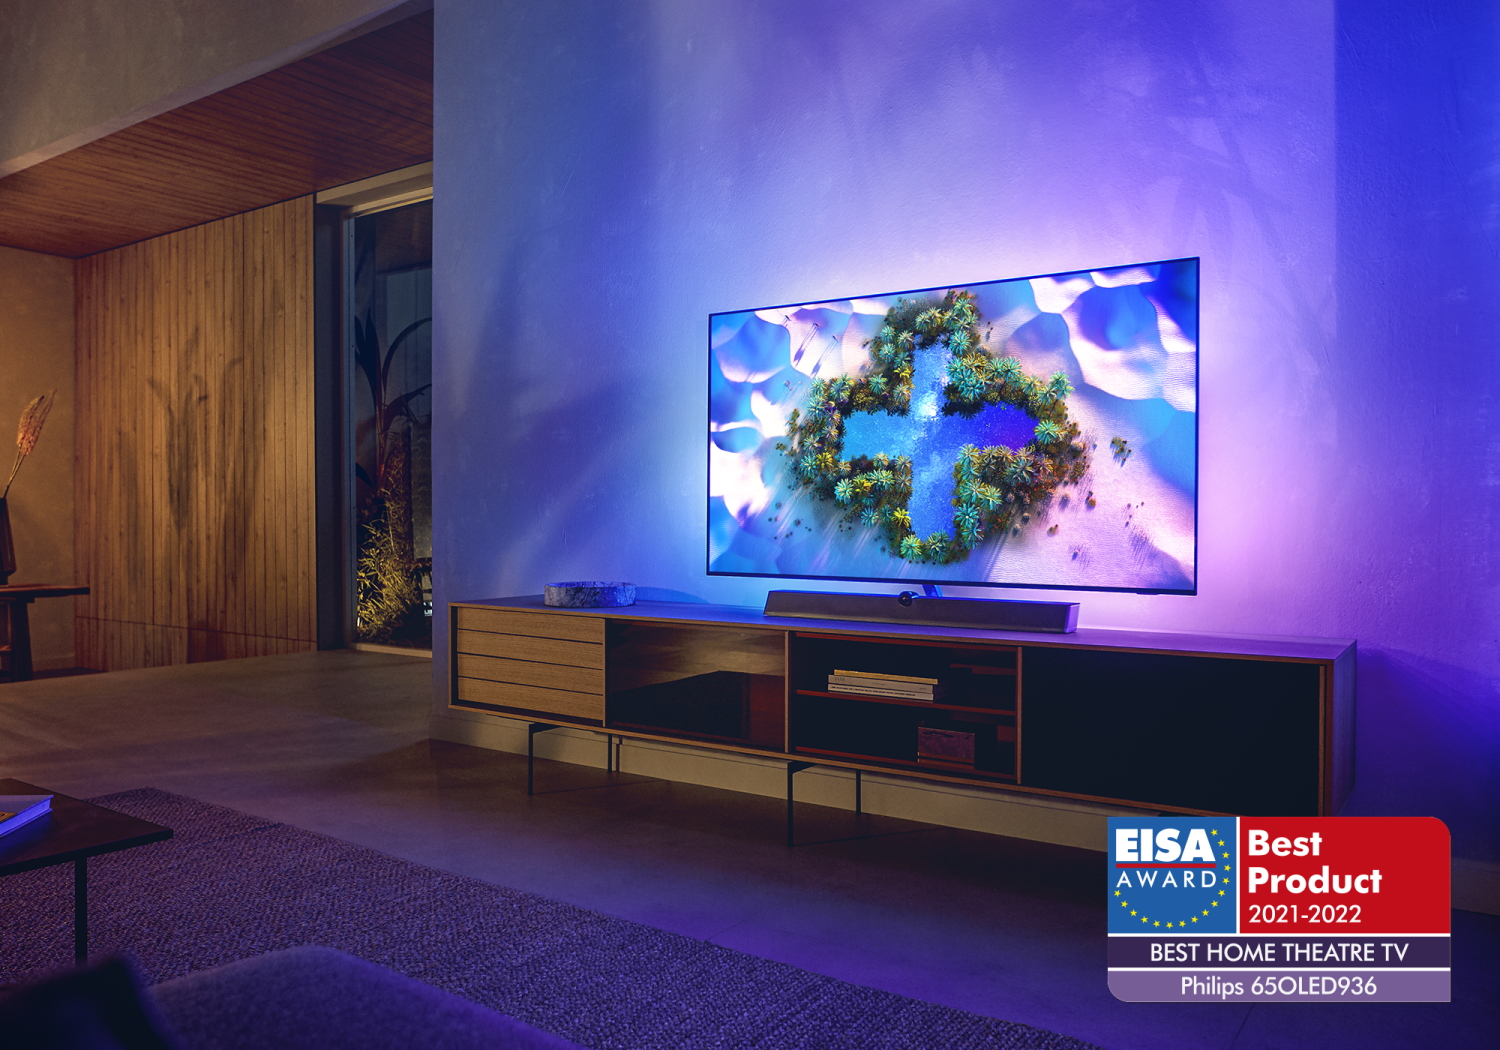 Philips OLED936 TV, Winner of iF Design and EISA 2021 Awards